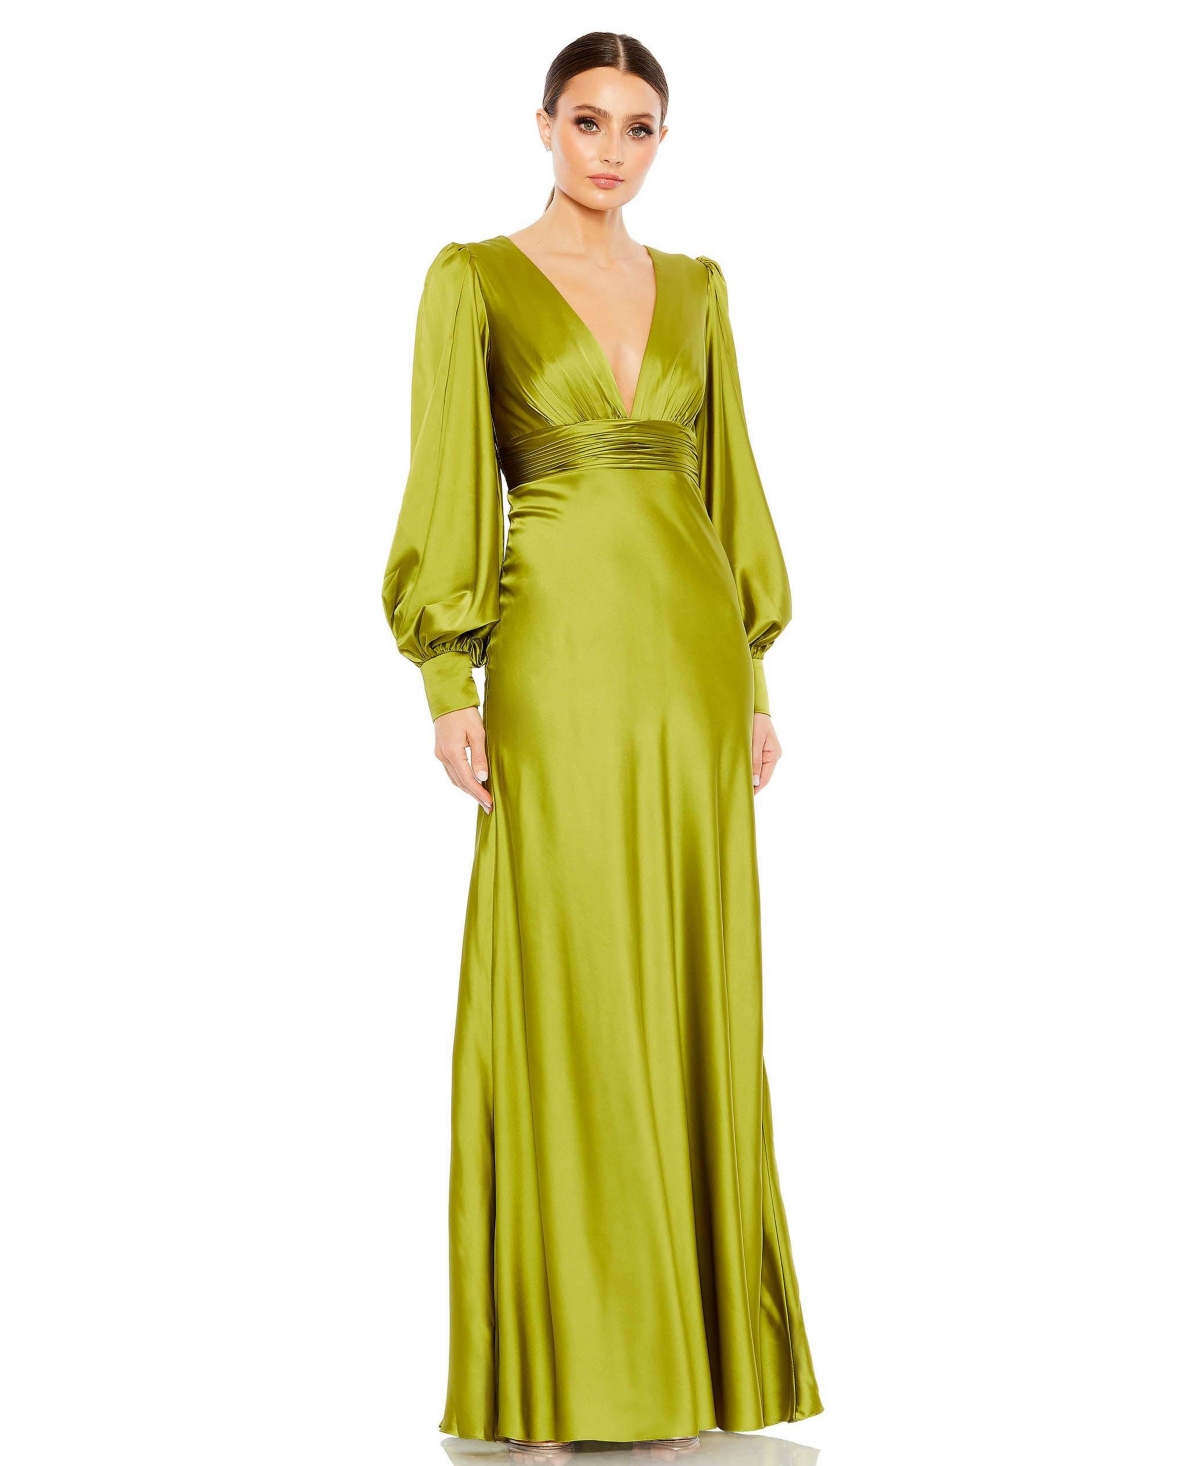 70s Prom, Formal, Evening, Party Dresses Womens Ieena Charmeuse Bishop Sleeve V Neck Gown - Apple green $498.00 AT vintagedancer.com